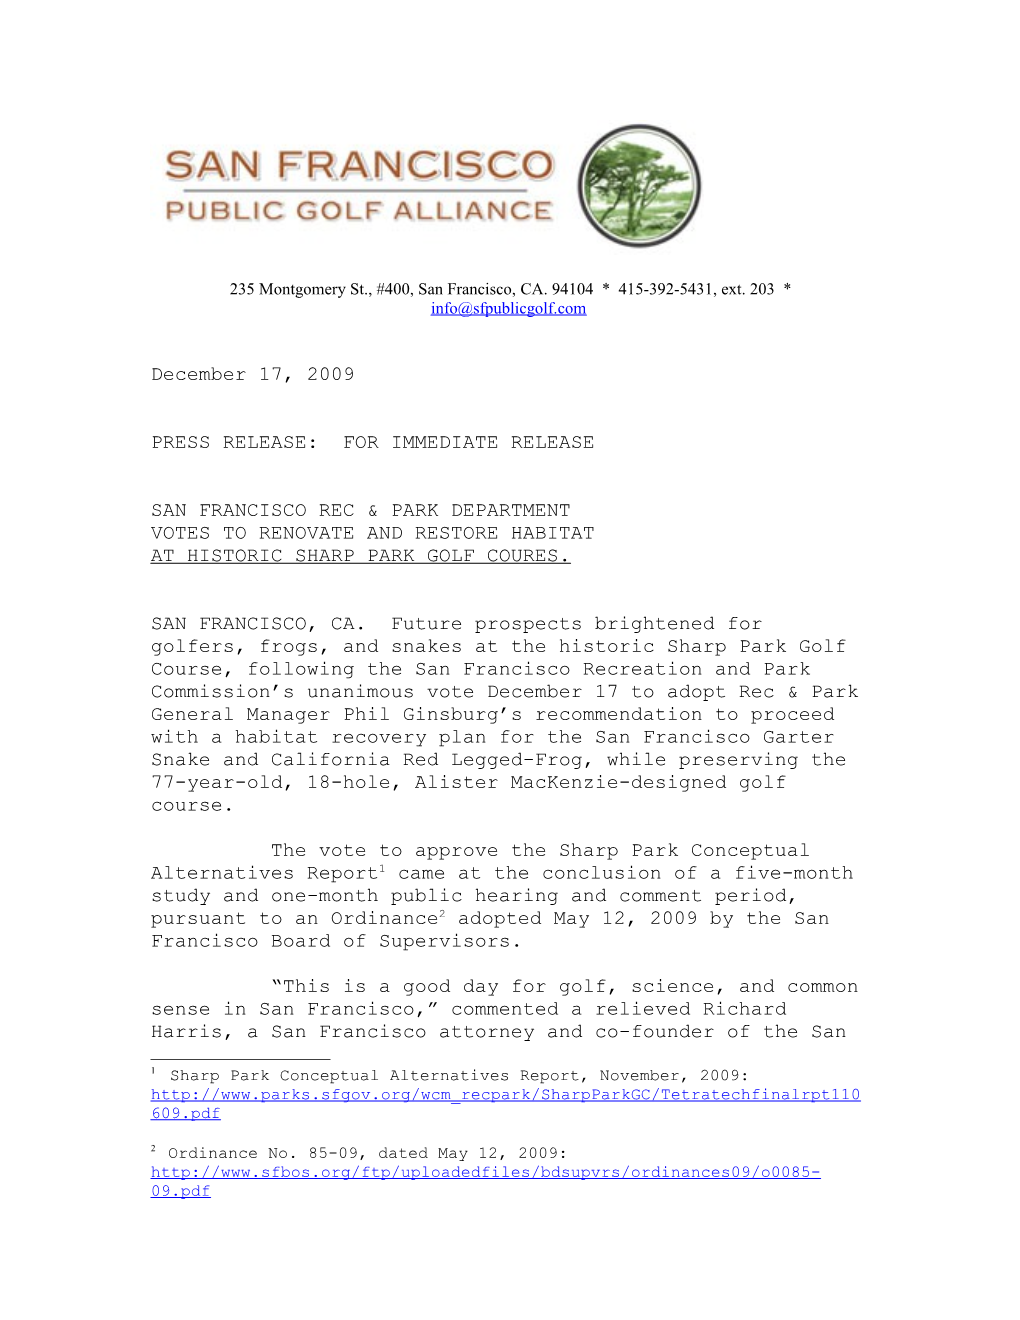 Press Release, Rec & Park Approves Spgolf, 12.17.09 (00002047)